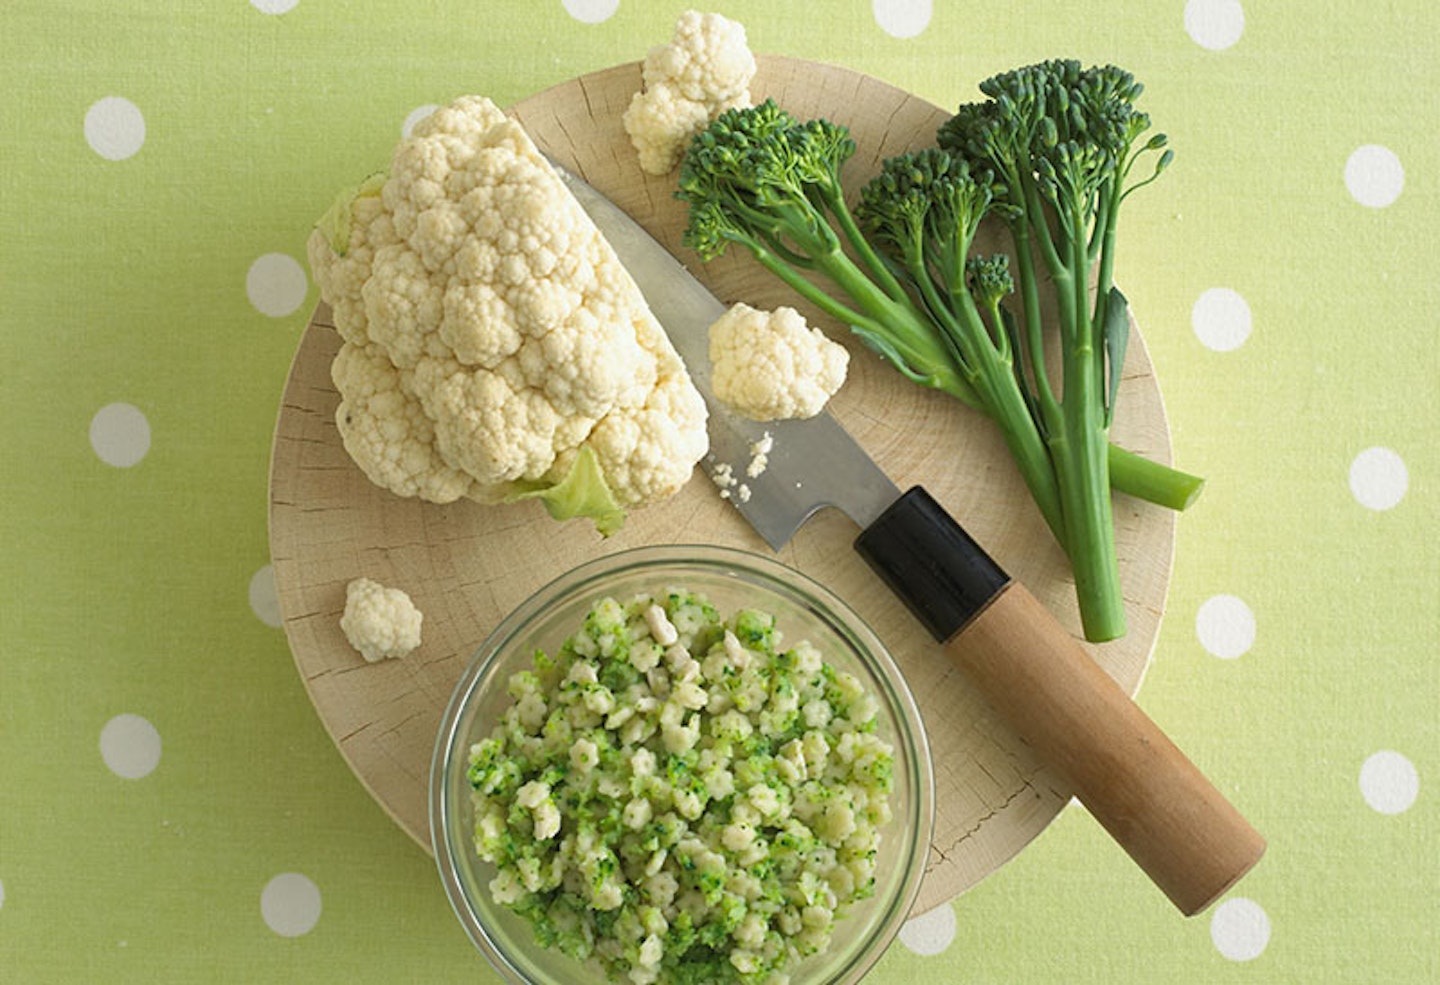 Annabel Karmel’s Broccoli and Cauliflower Purée